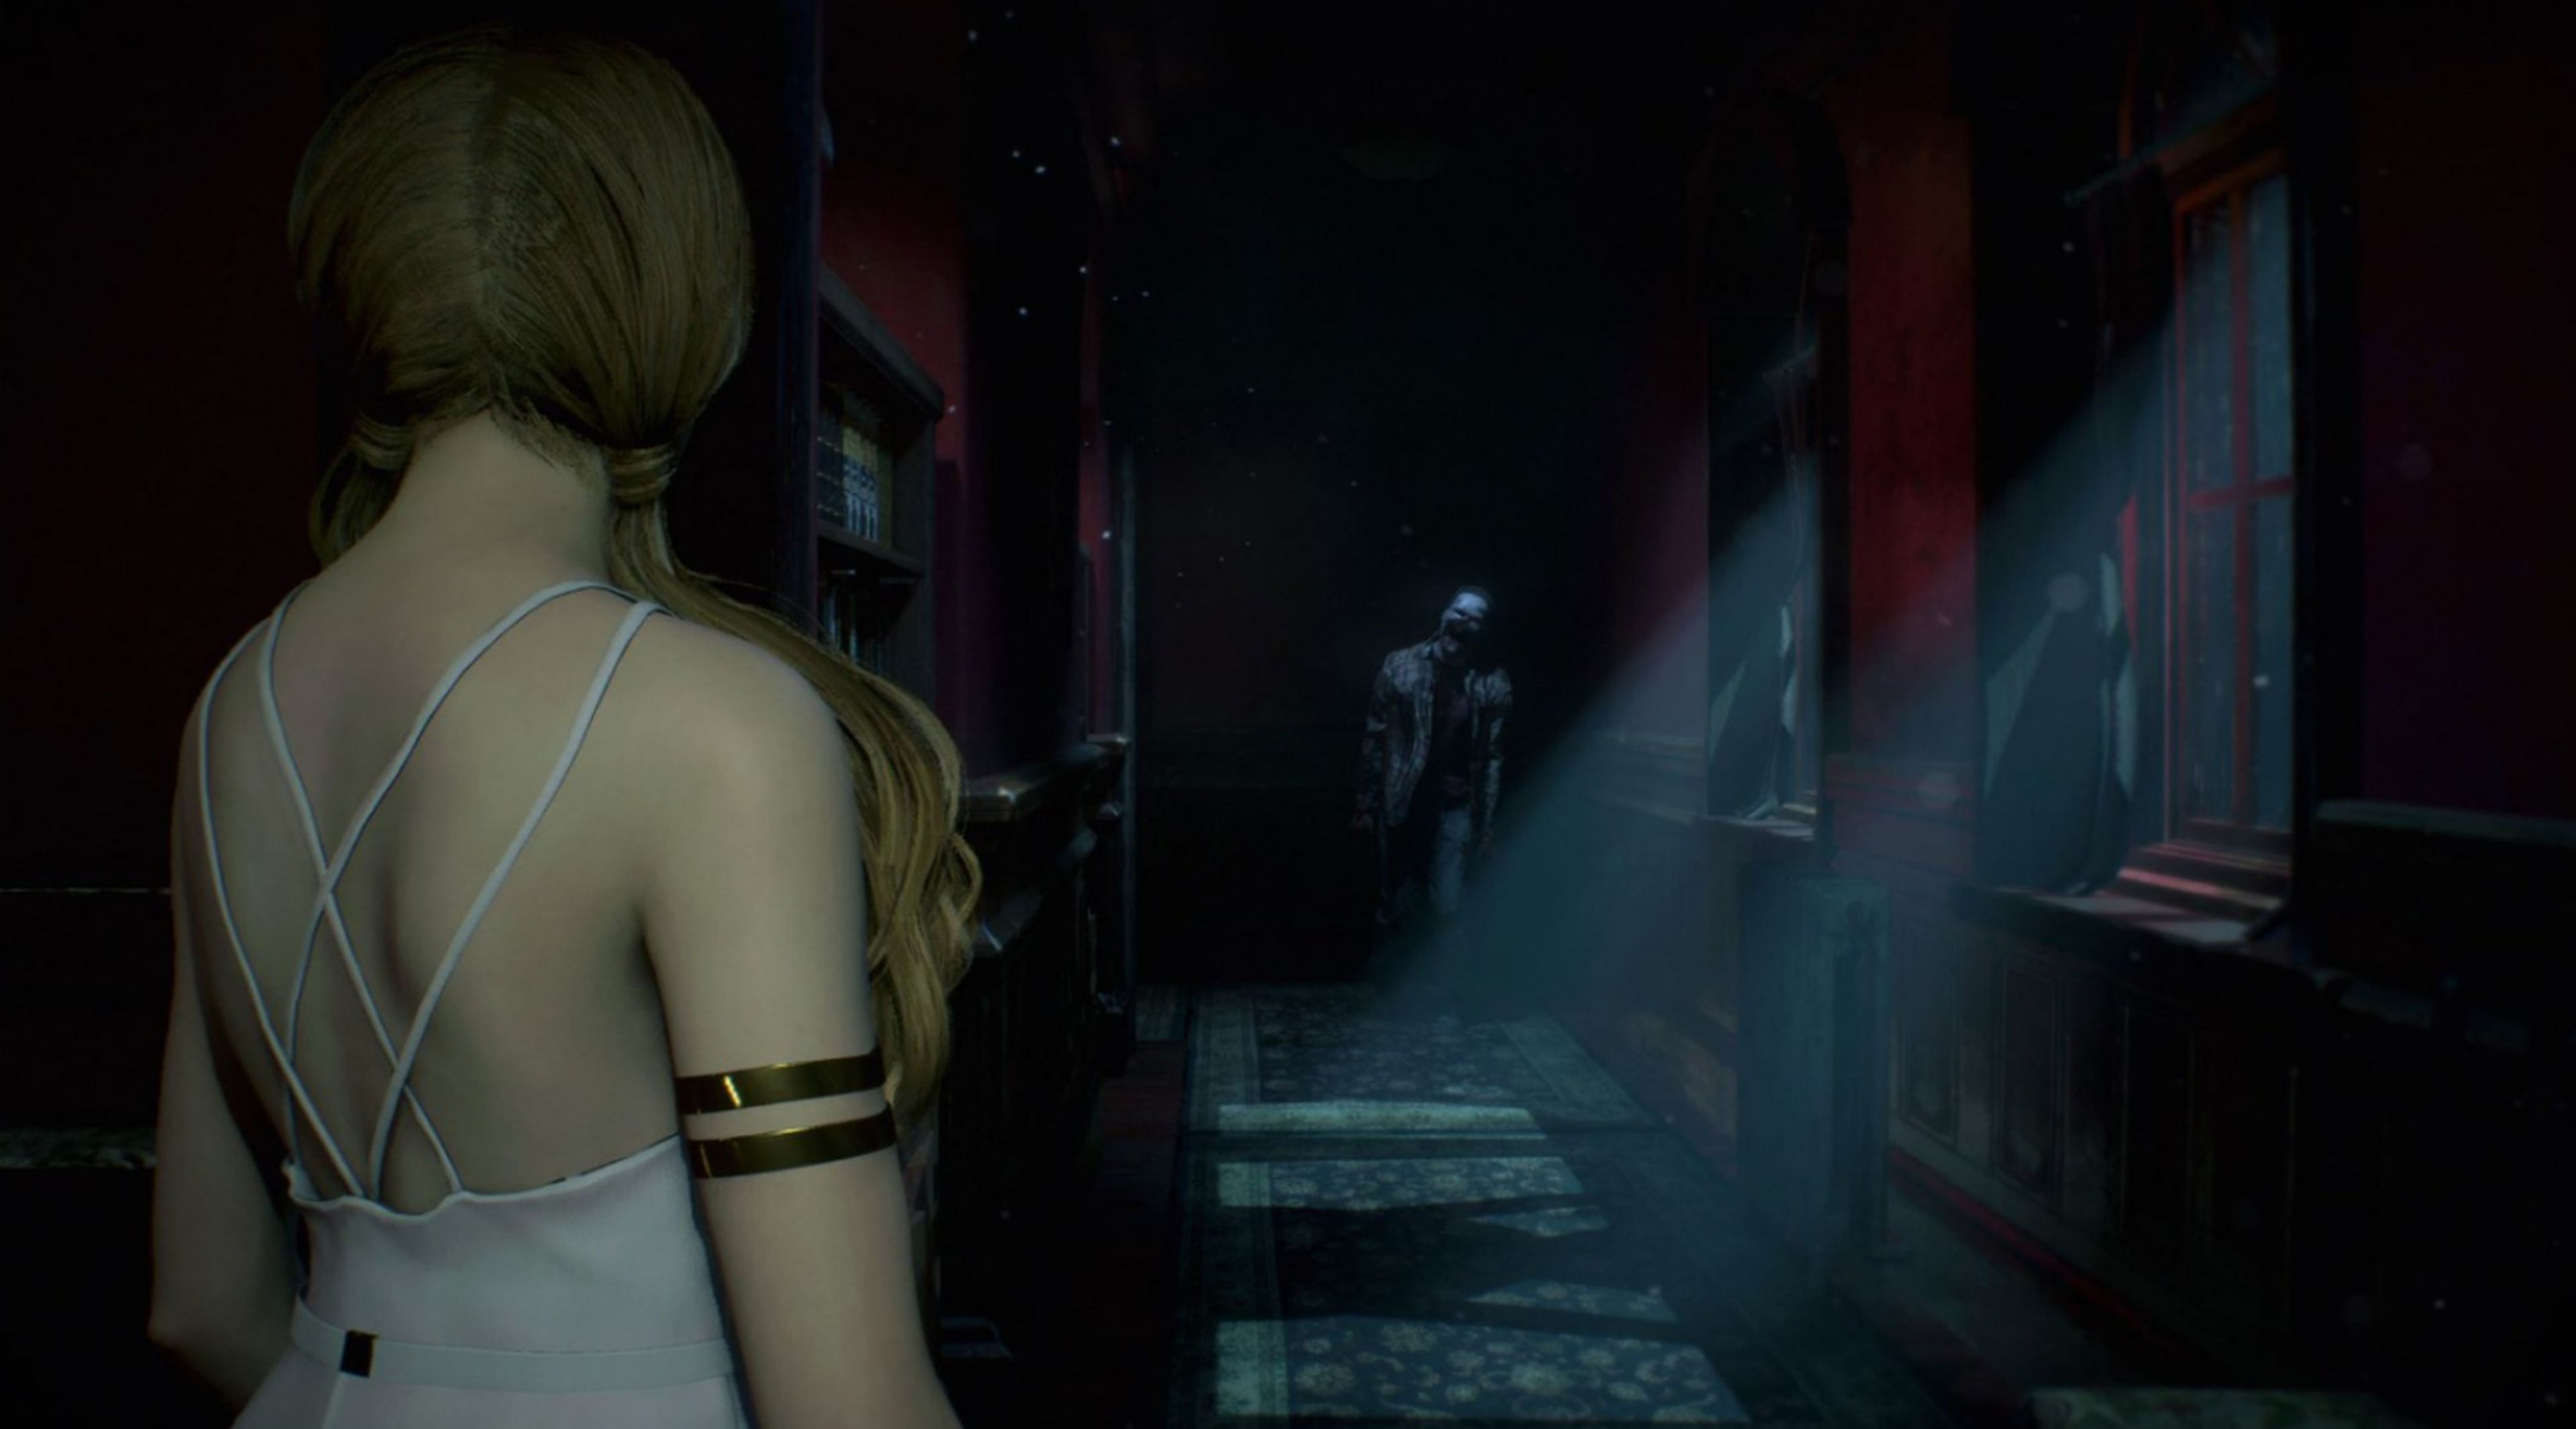 DLC The Ghost Survivors de Resident Evil 2 Remake